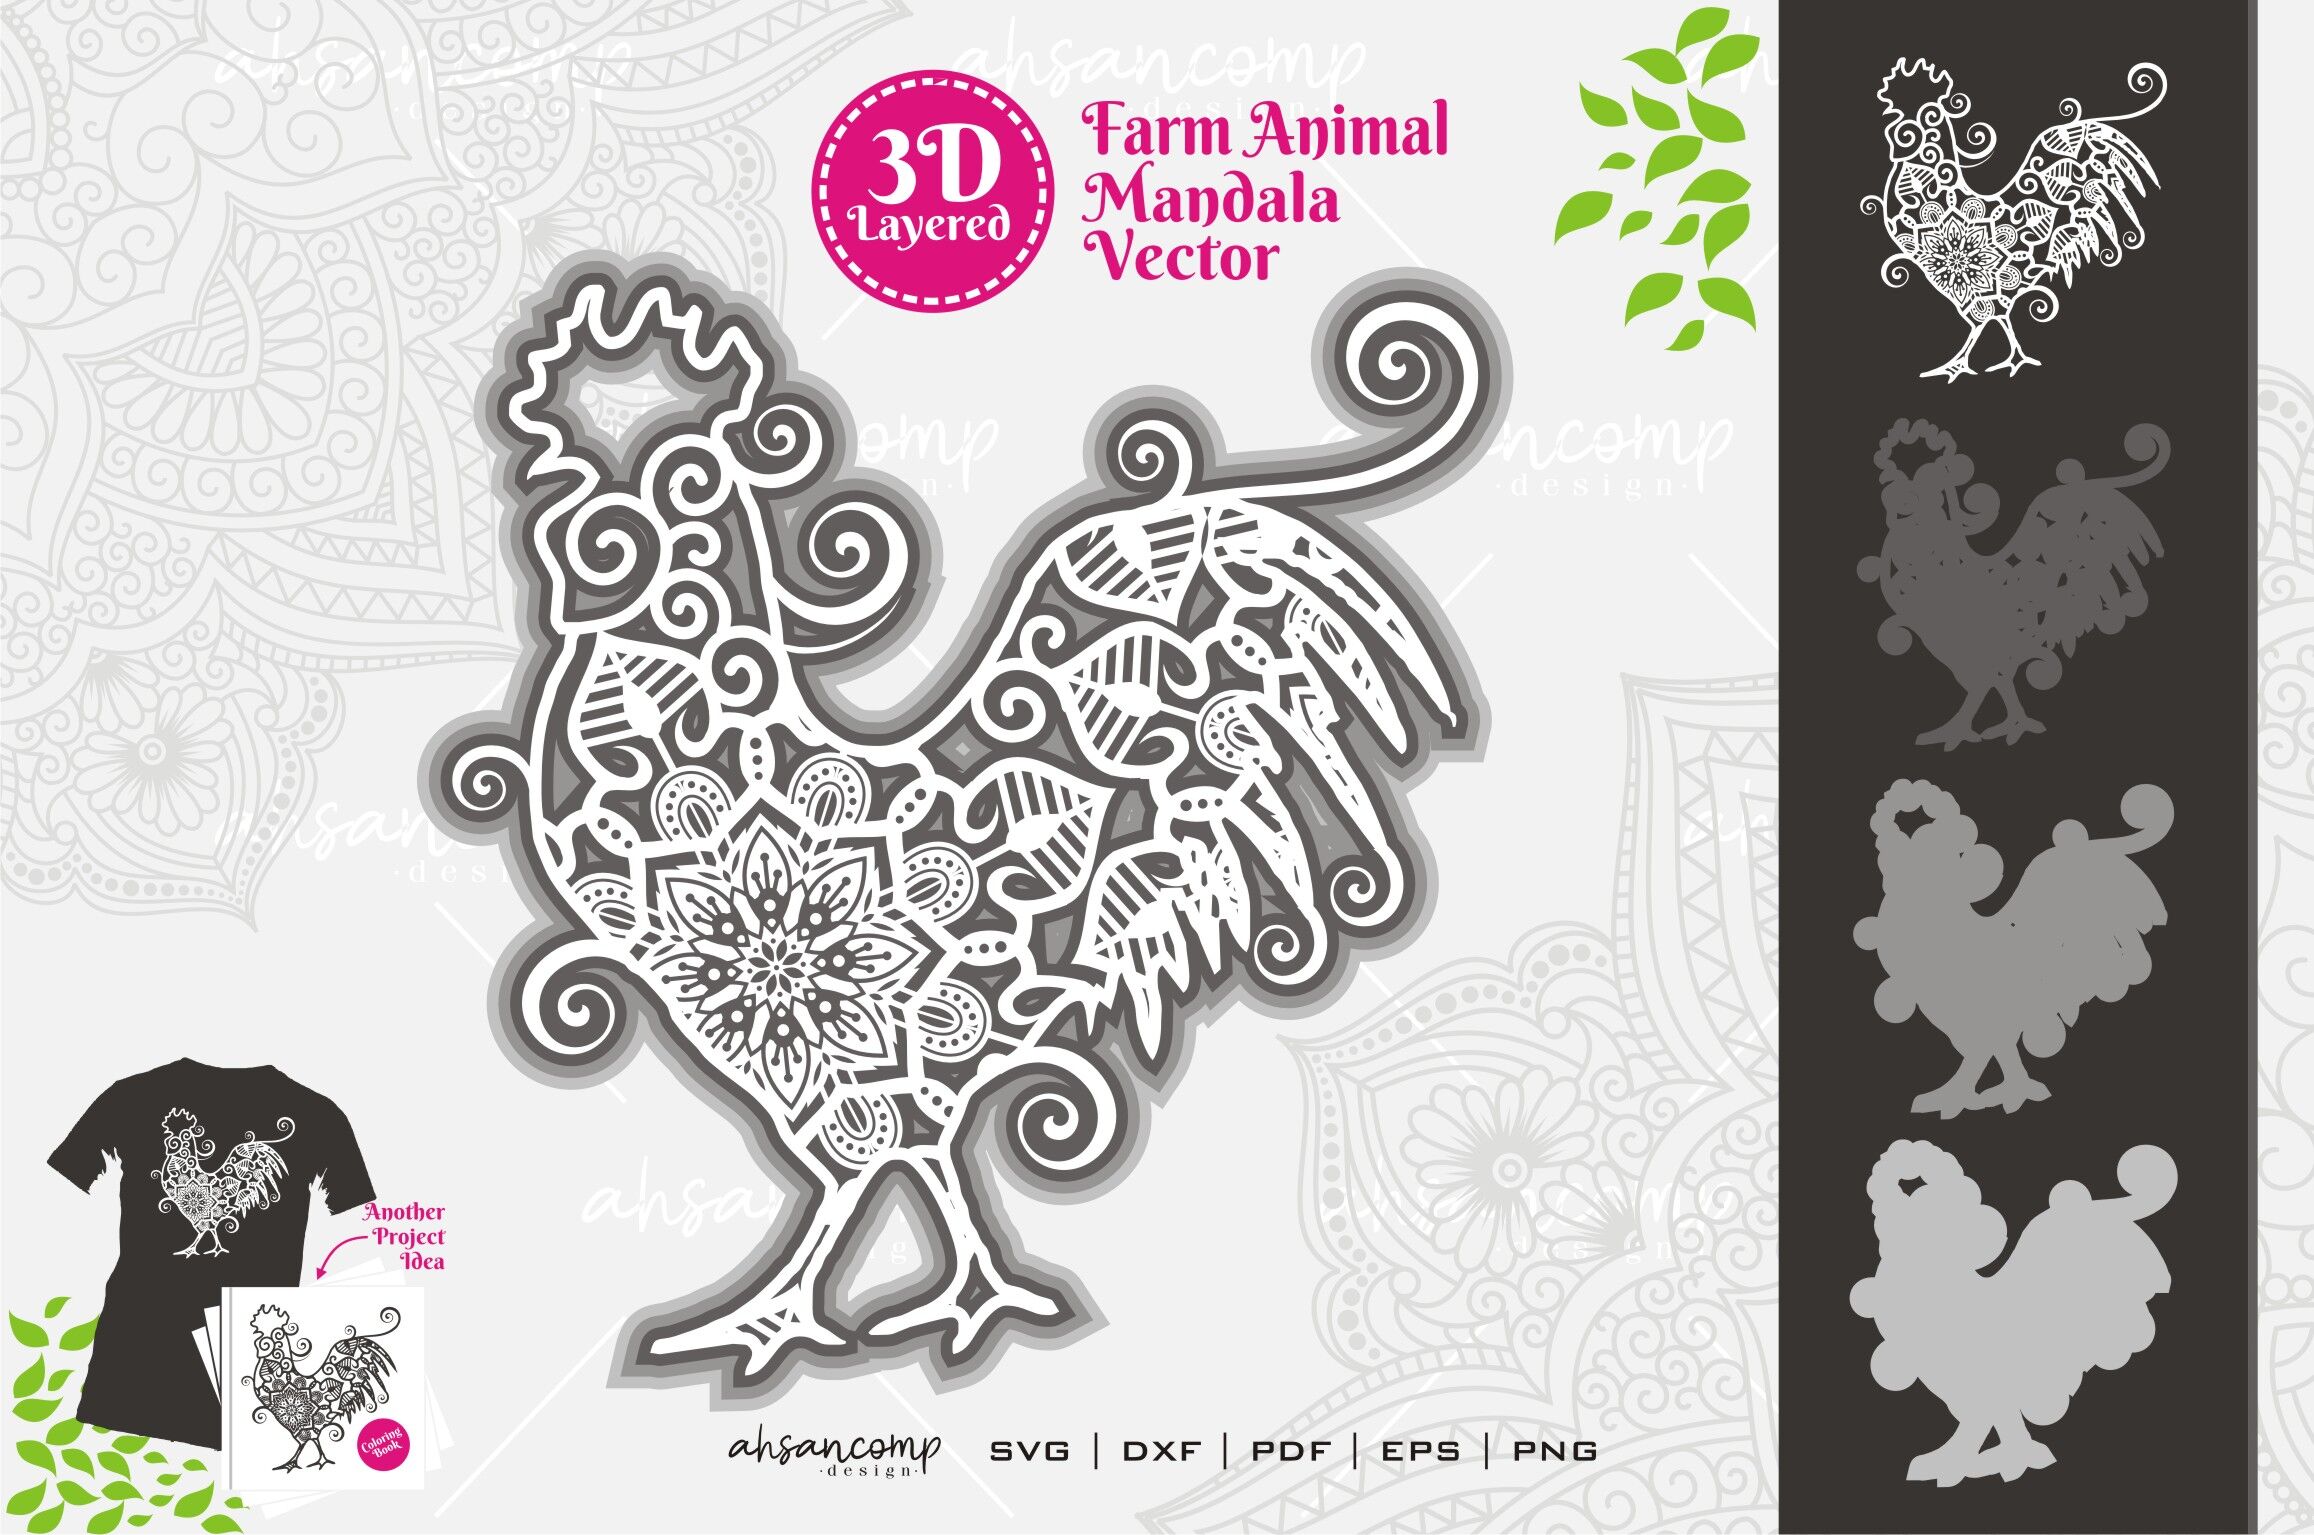 Download Farm Animal Mandala Svg 3d Layered 14 By Ahsancomp Studio Thehungryjpeg Com